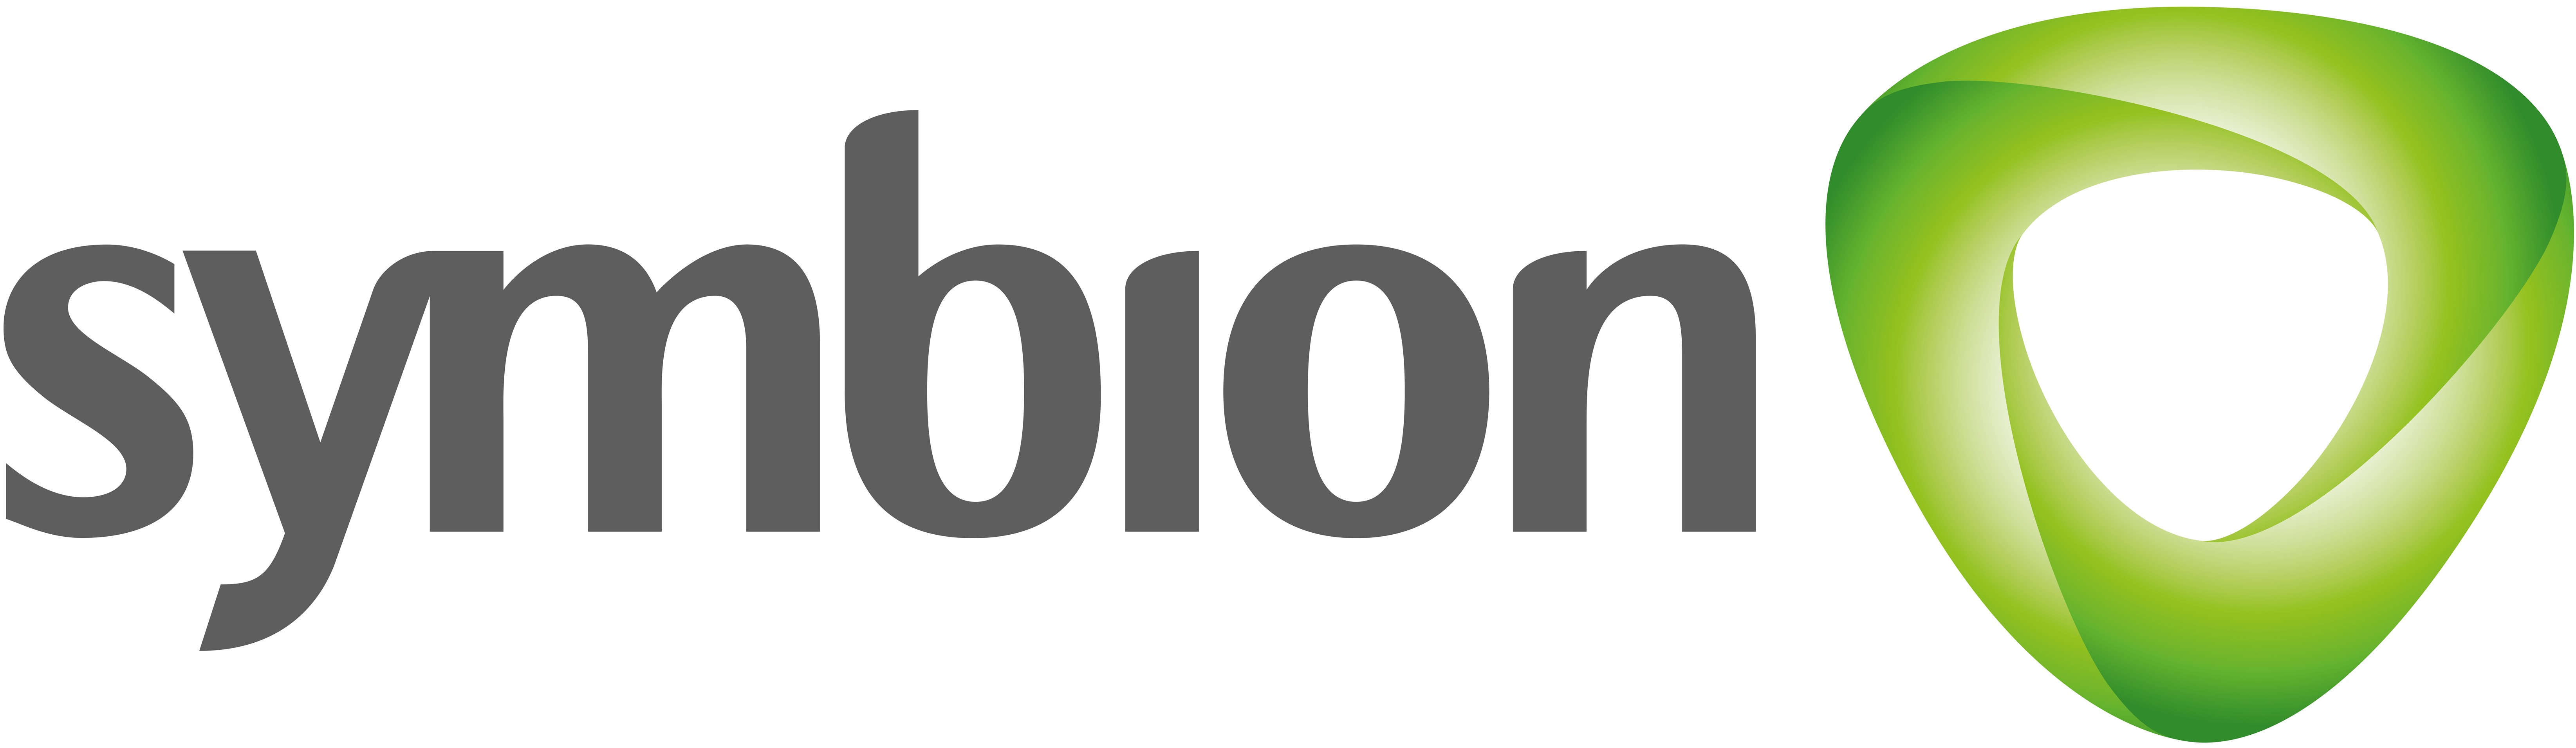 Symbion_logo